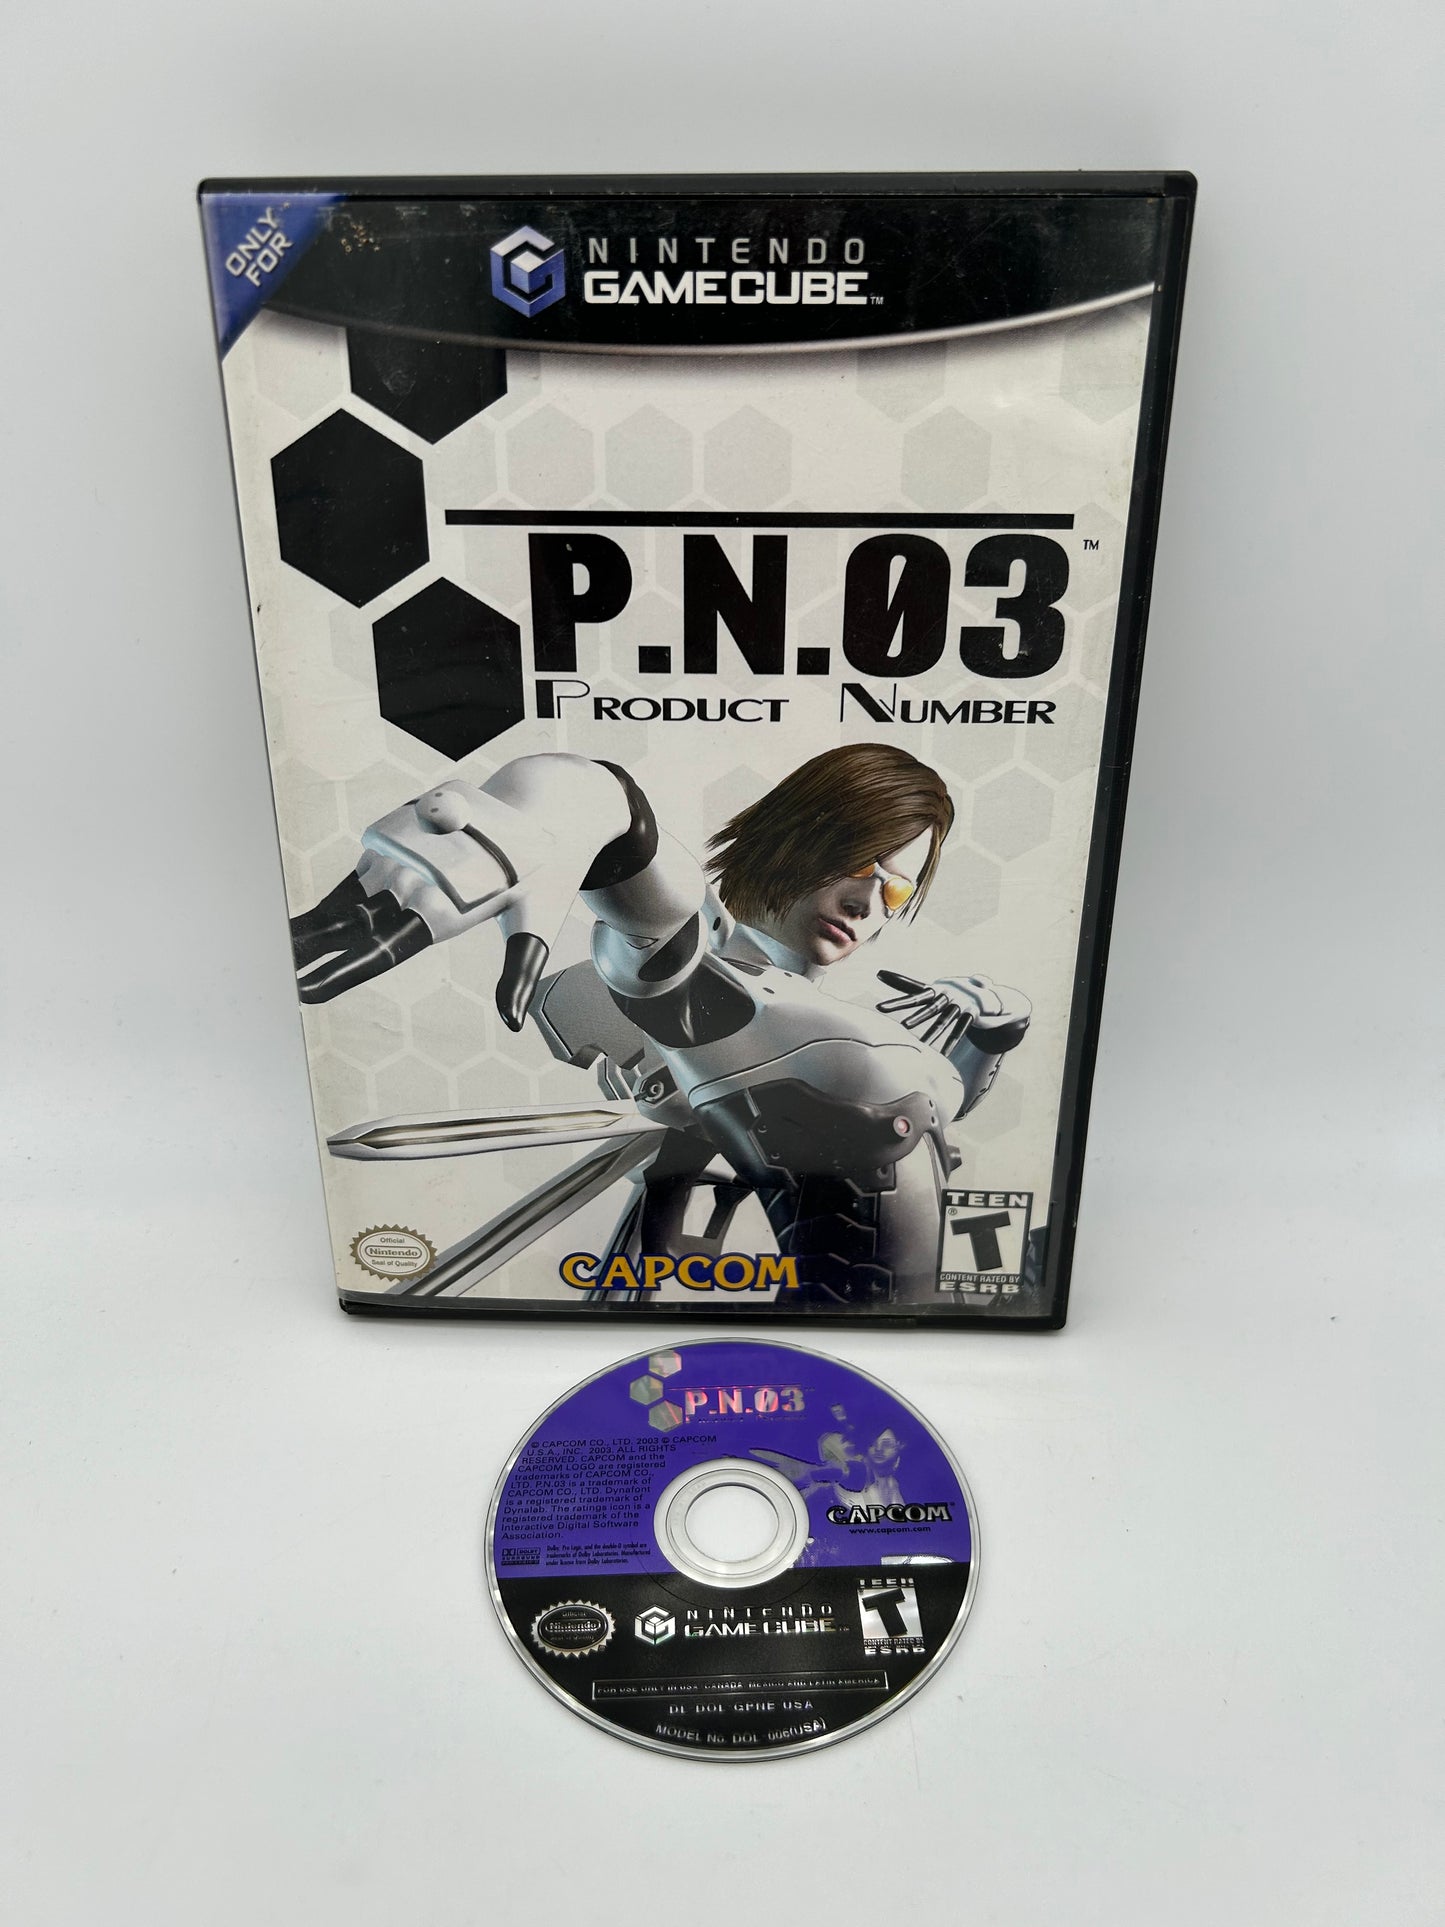 PiXEL-RETRO.COM : NINTENDO GAMECUBE COMPLETE CIB BOX MANUAL GAME NTSC PN 03 PRODUCT NUMBER